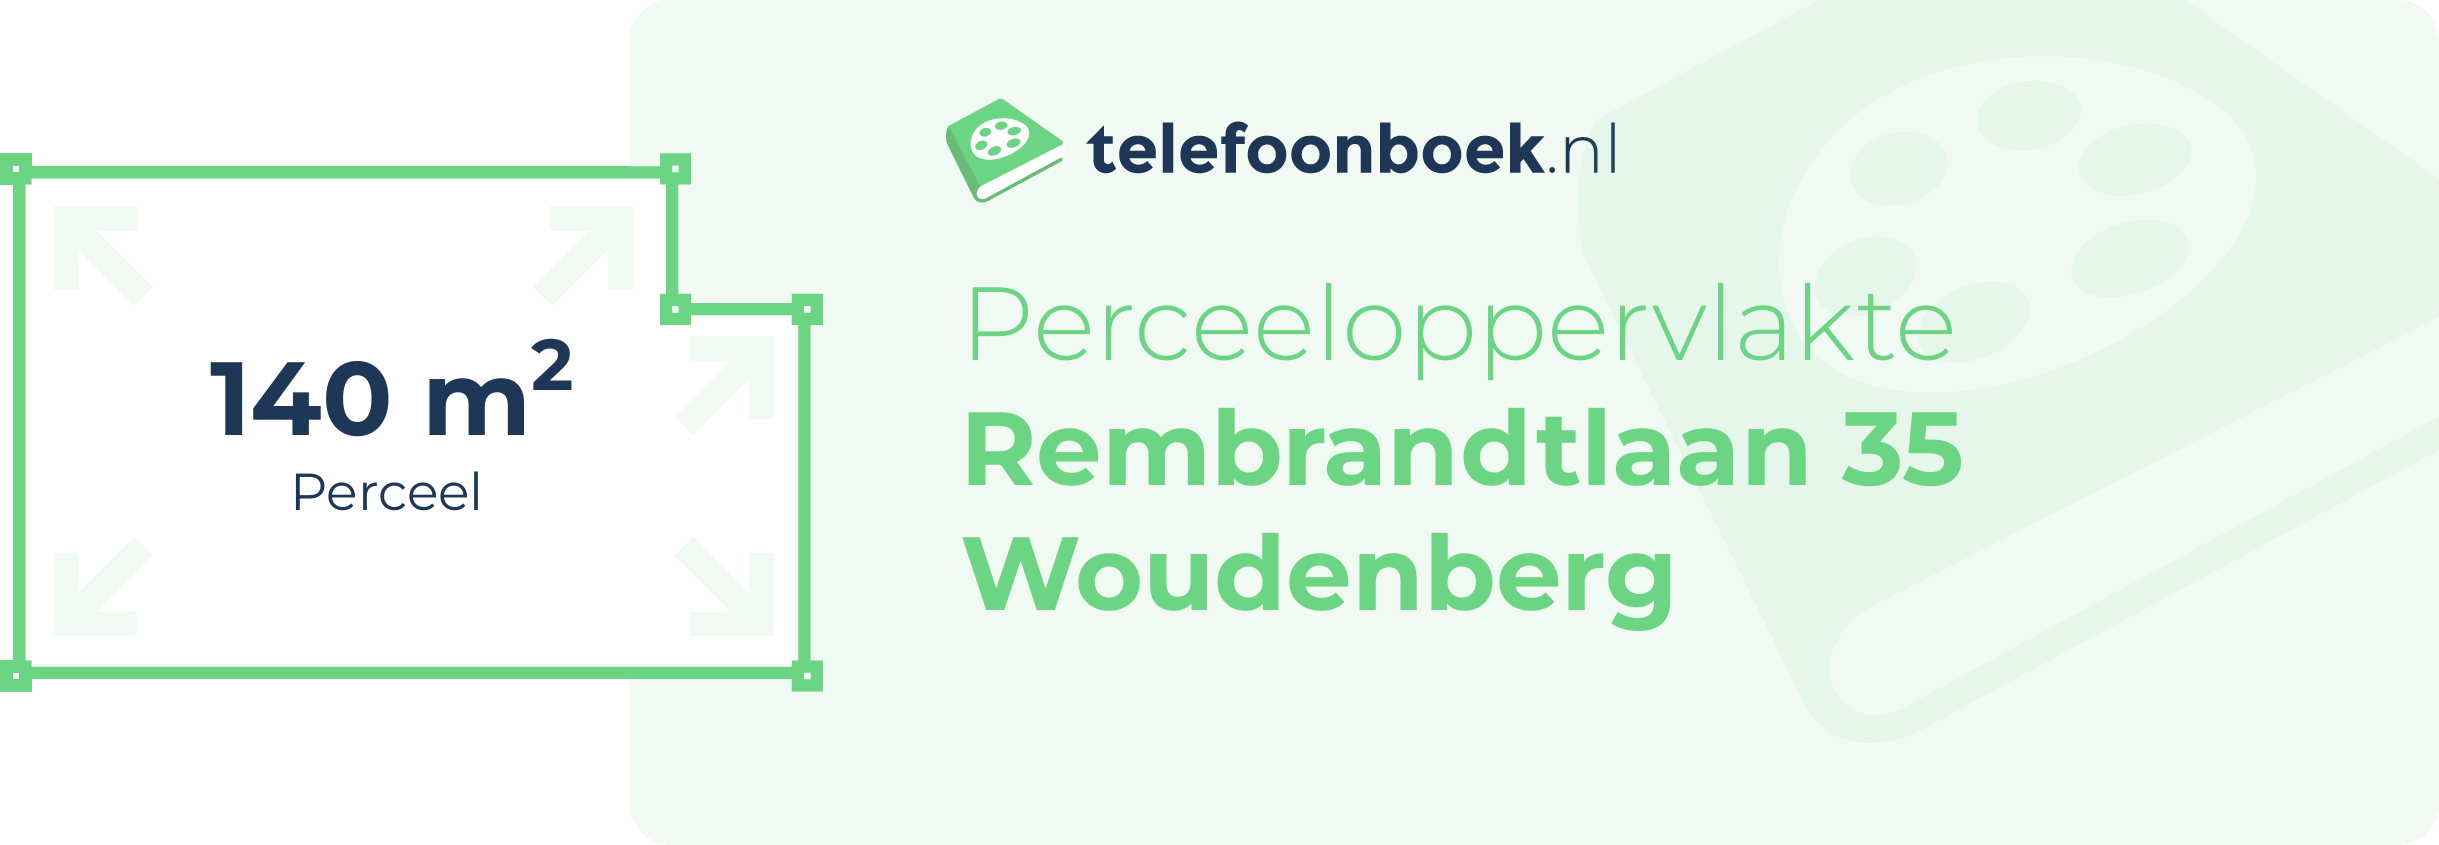 Perceeloppervlakte Rembrandtlaan 35 Woudenberg